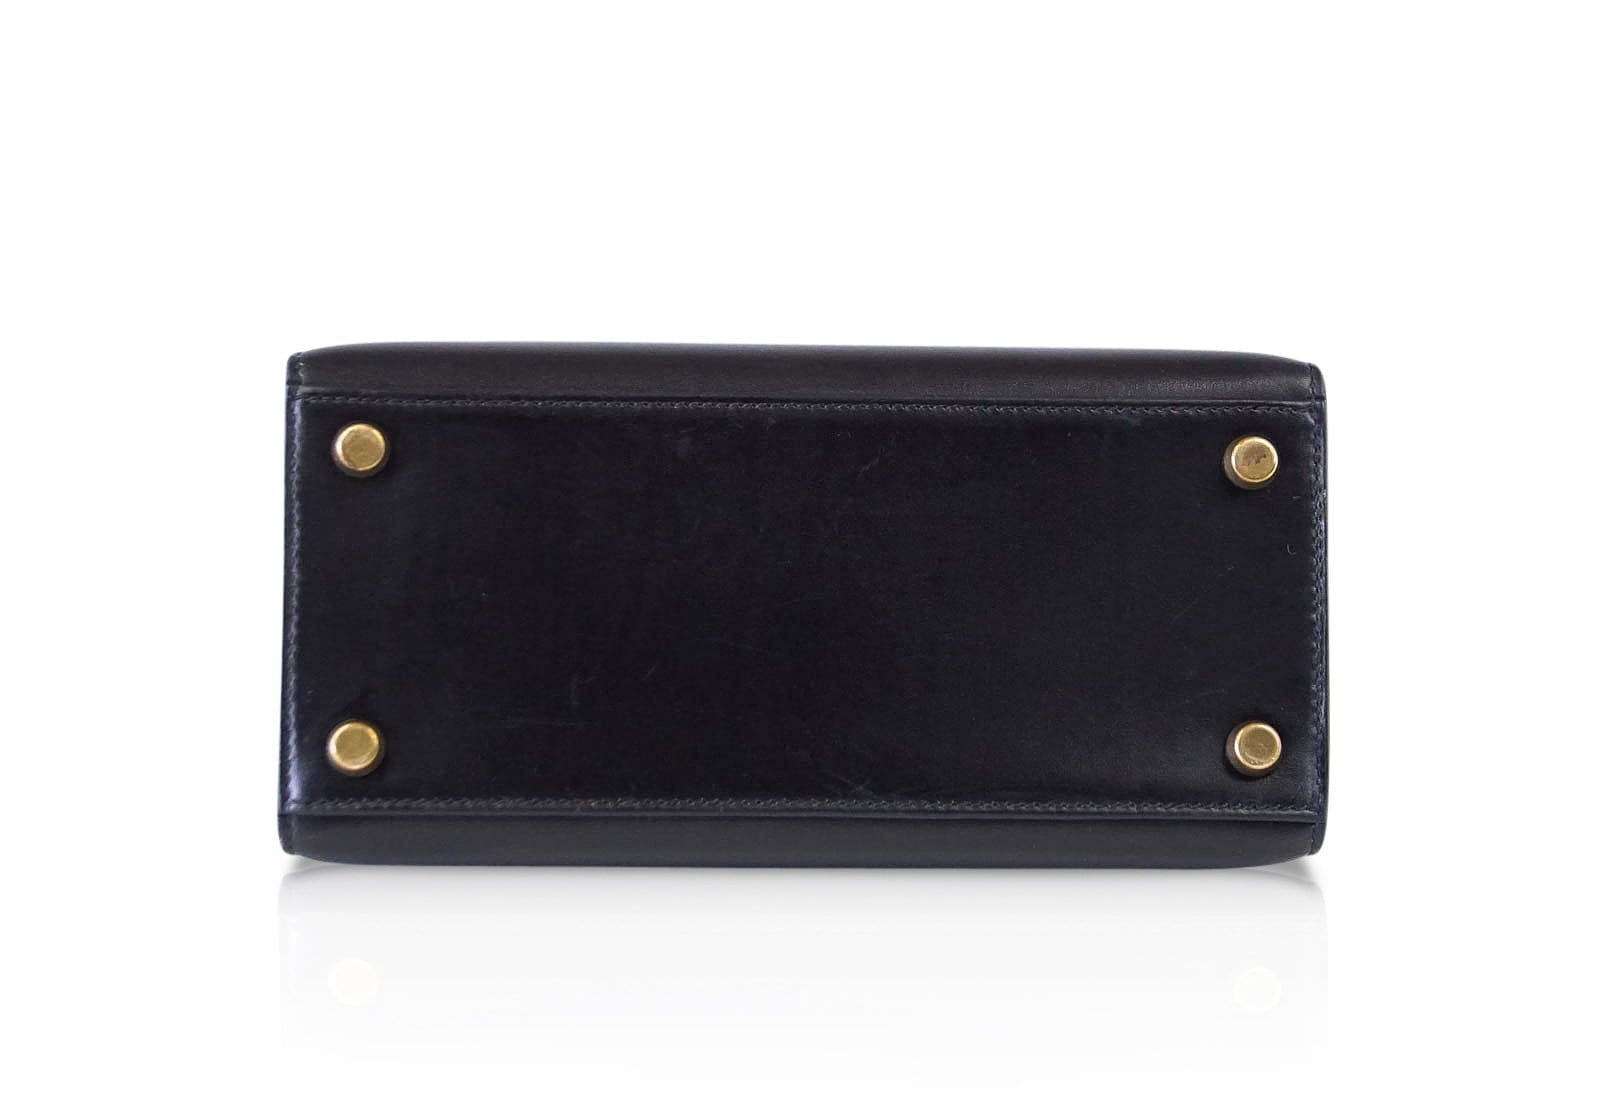 Hermes Vintage Mini Kelly 20 Sellier Soleil Bag Box Leather Gold Hardware